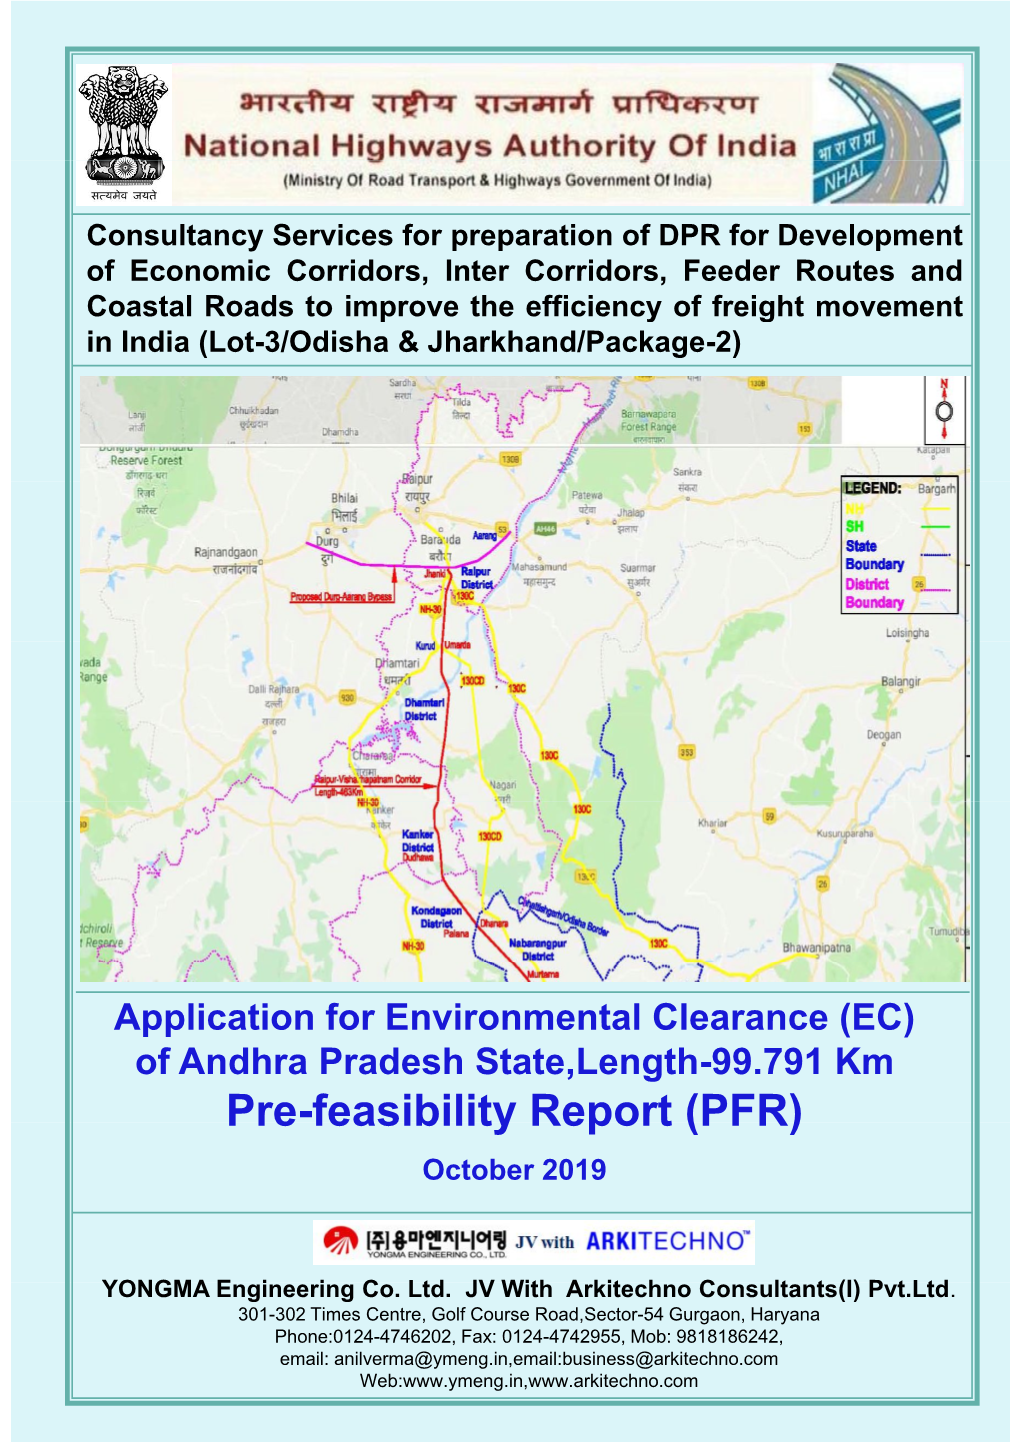 (PFR) Pre-Feasibility Report